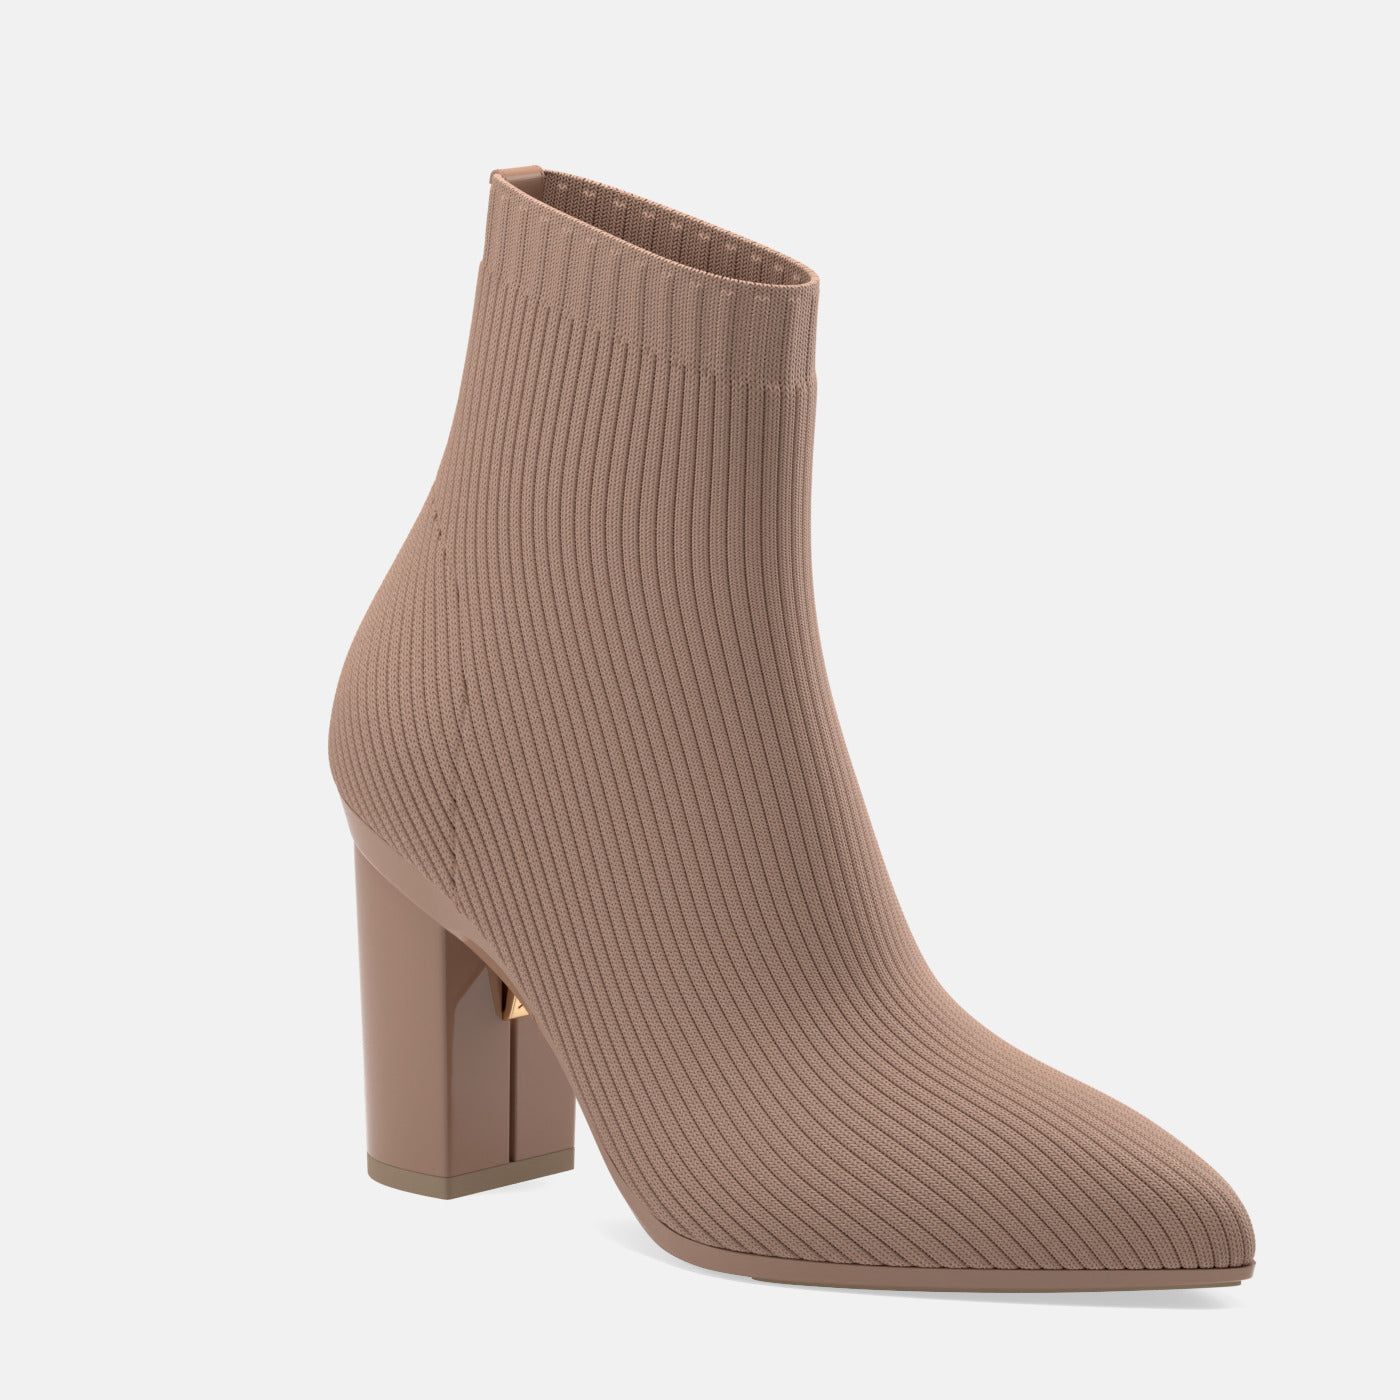 Black ankle boot for interchangeable heells | Tanya Heath Paris